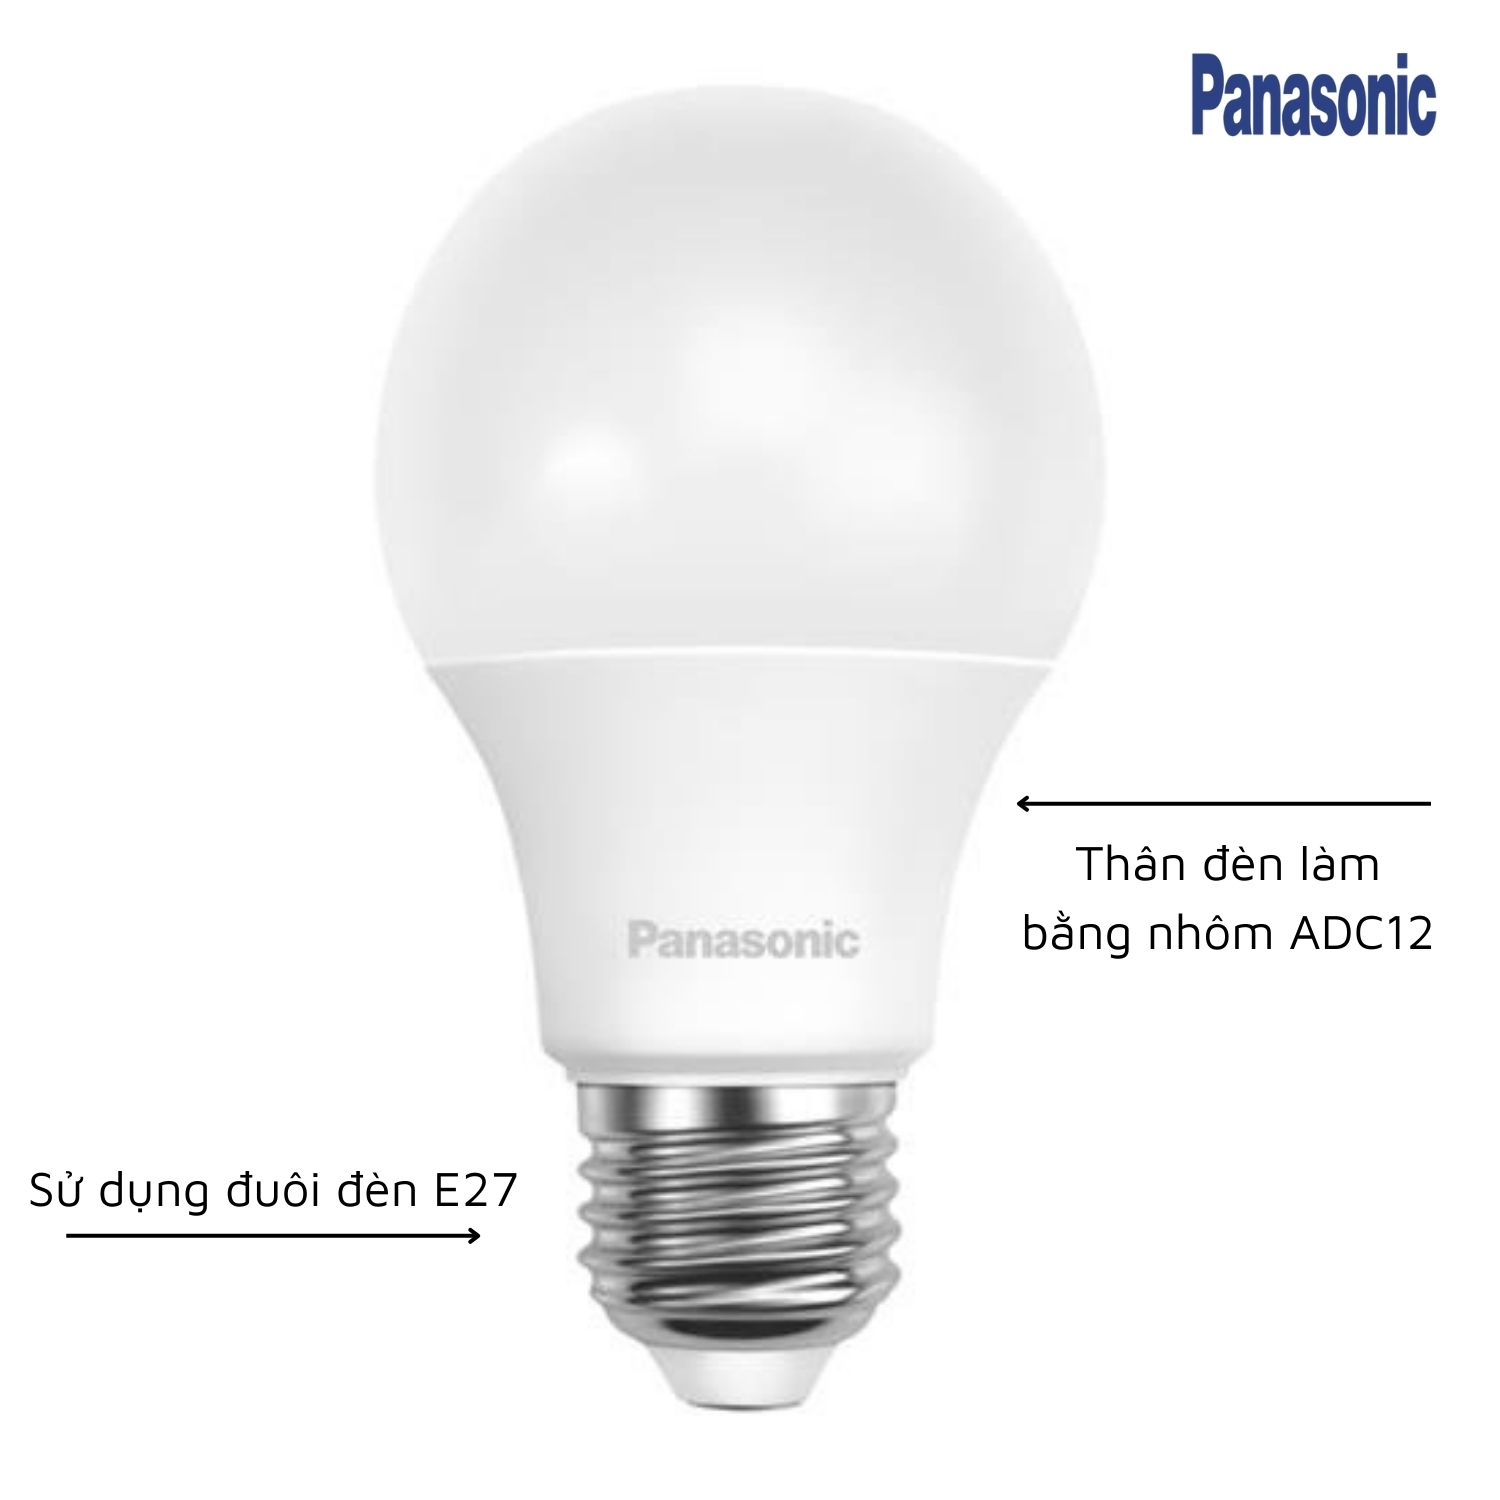 Panasonic - Đèn LED Bulb Basic 15W | LDTCH15DG1A7